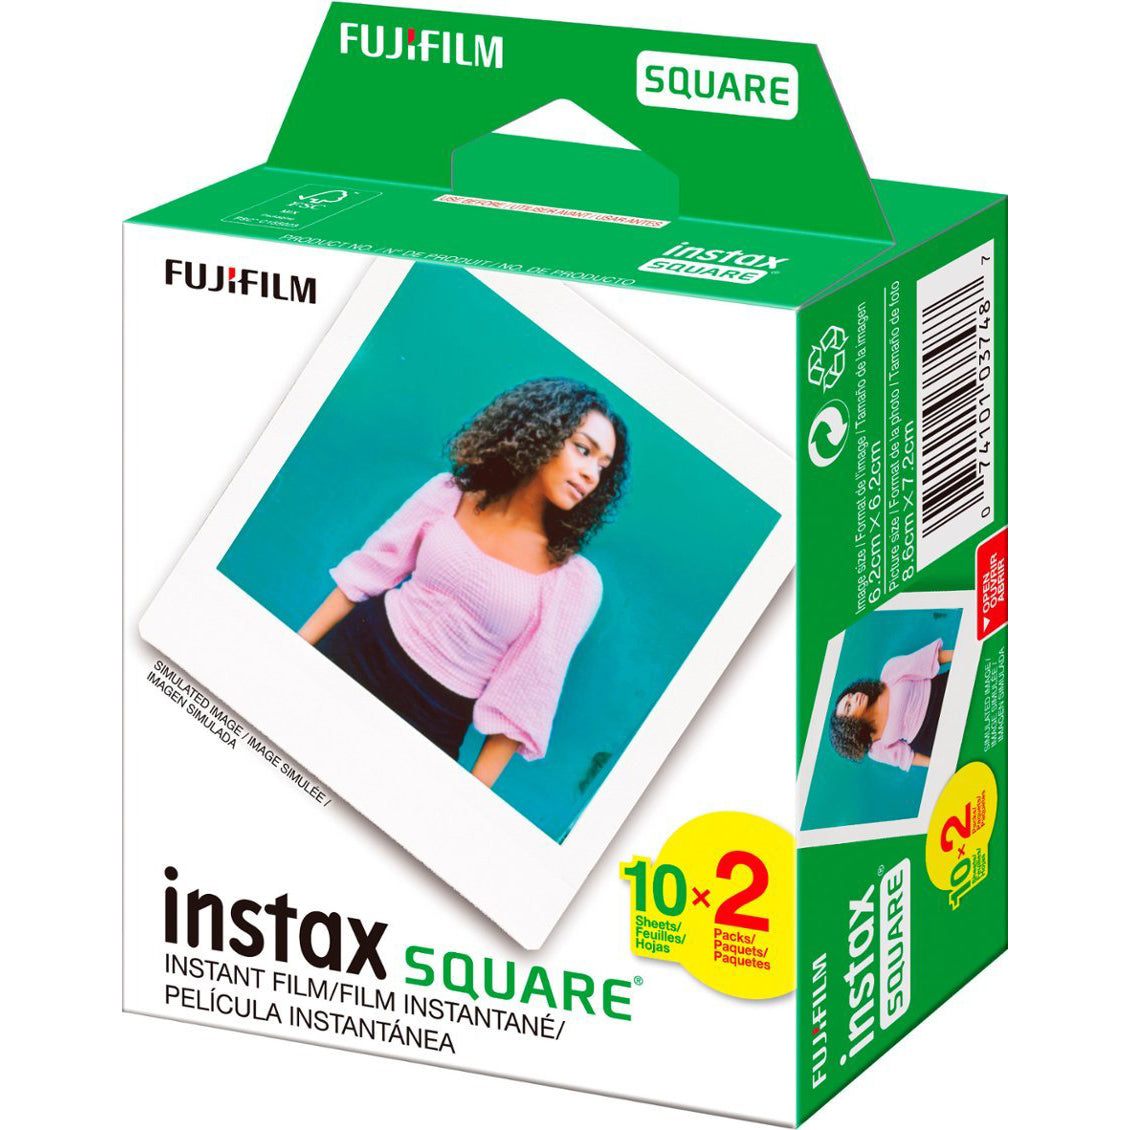 SQUARE Film - INSTAX by Fujifilm (Australia)